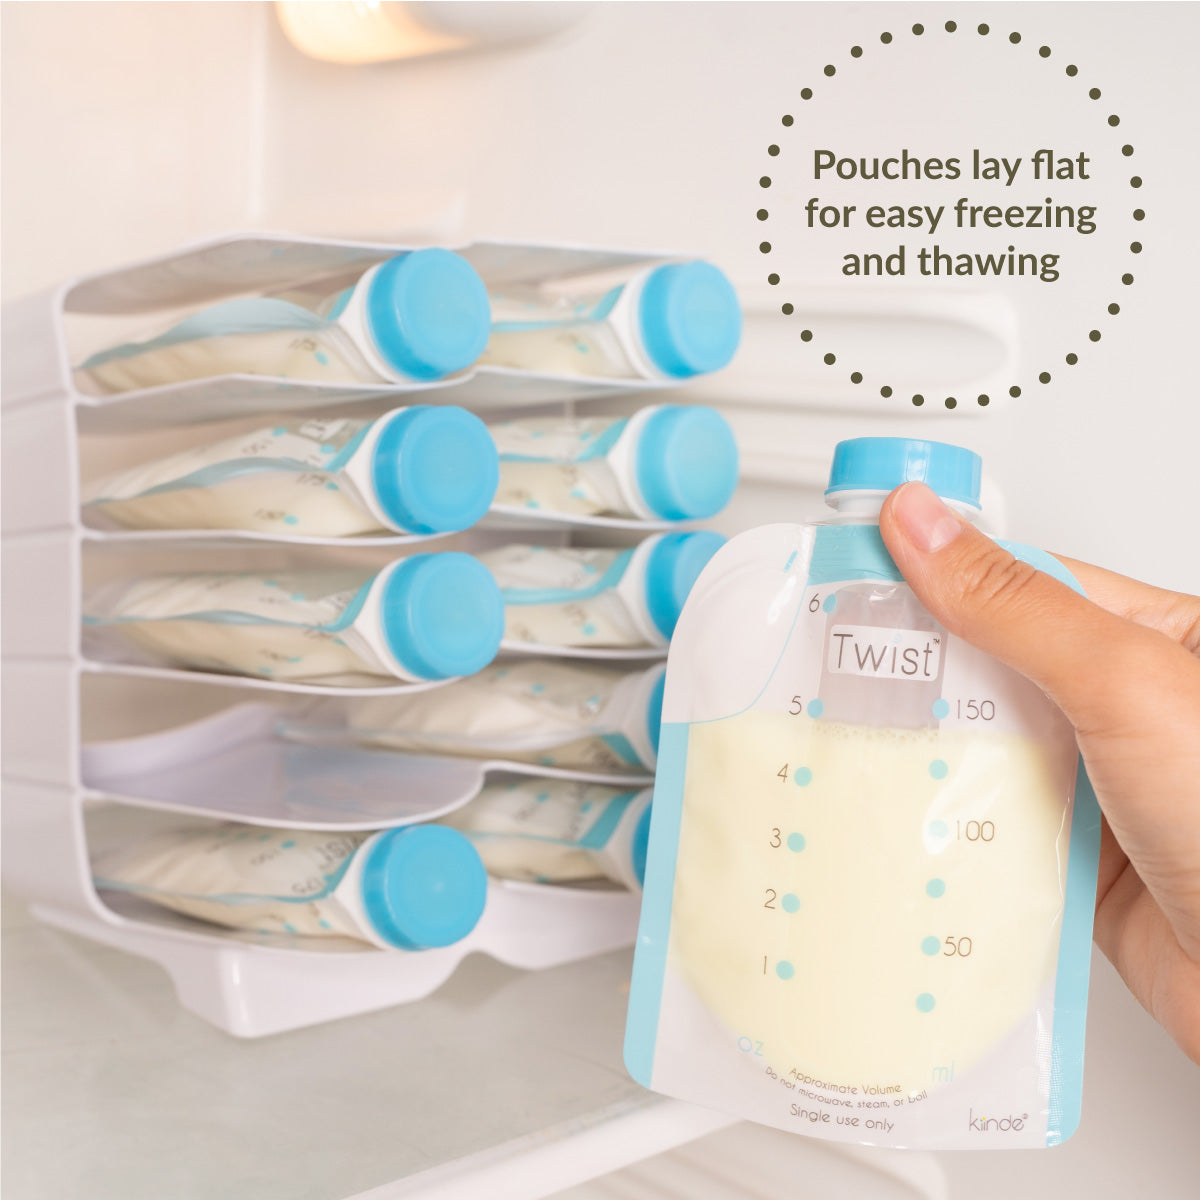 Kiinde Breast Milk Storage Starter Set review - Reviewed